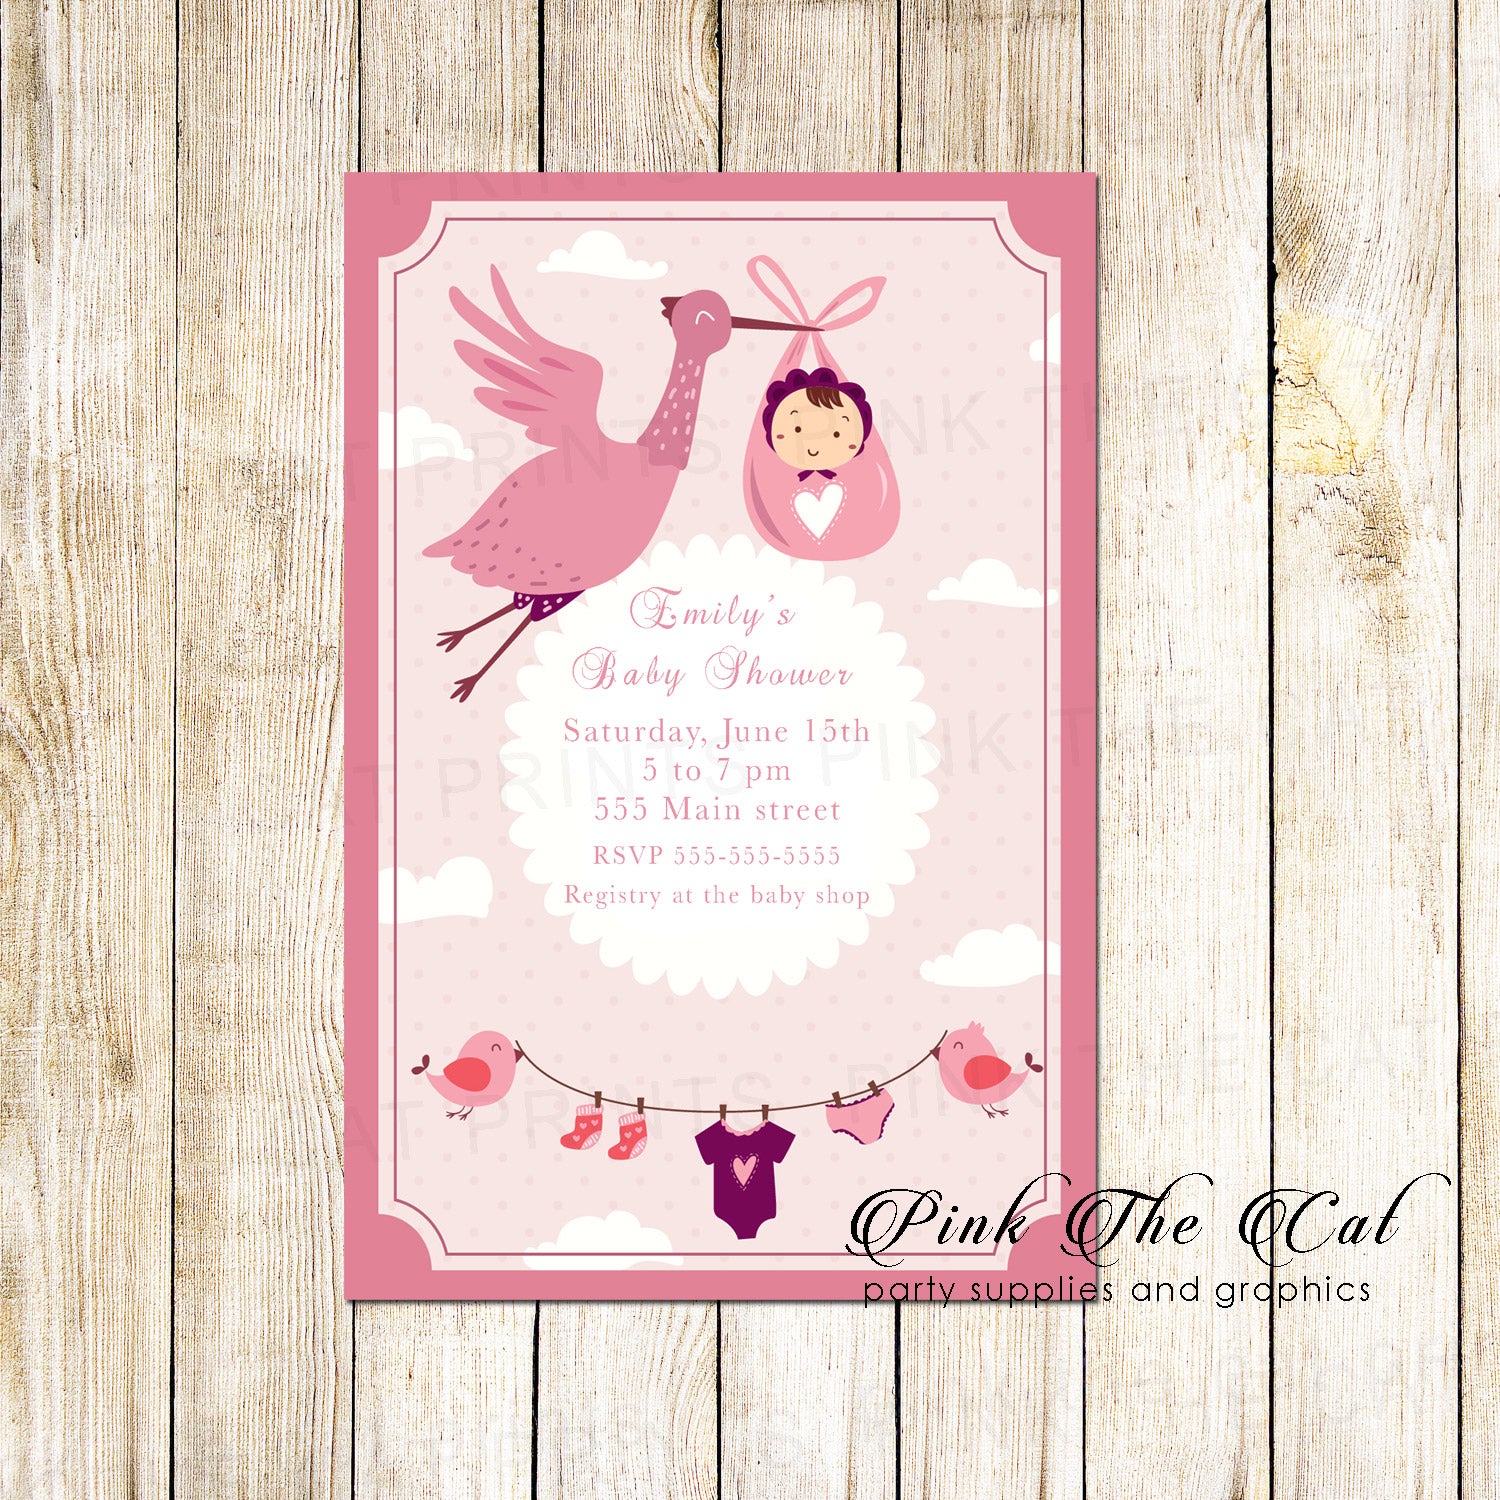 Pink stork baby shower invitation printable instant download